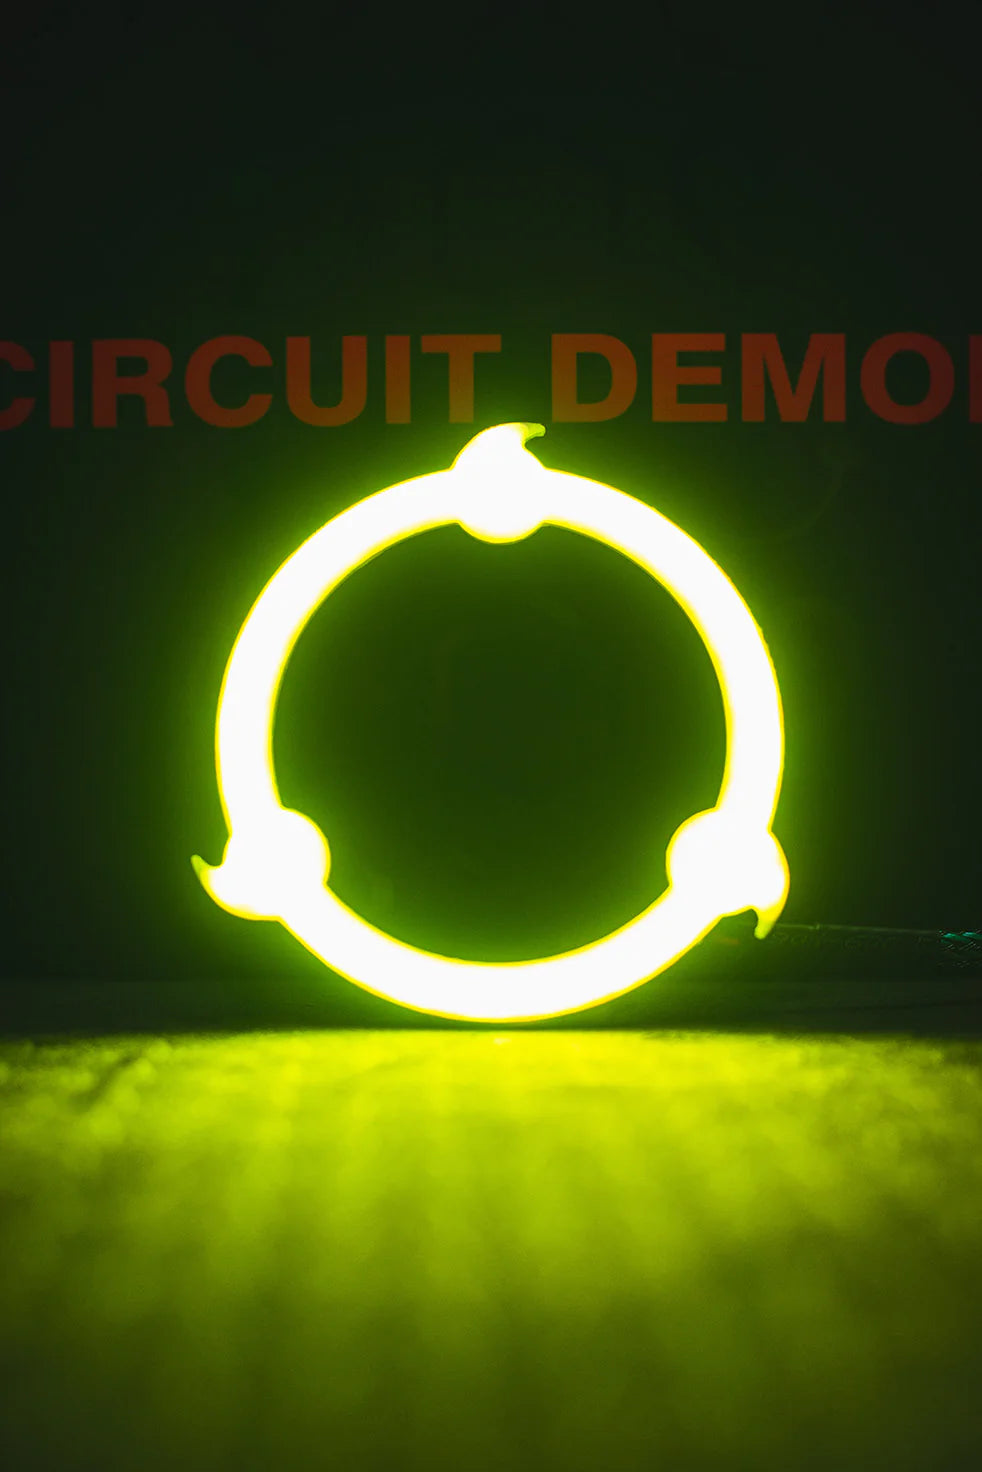 Circuit Demon Stage 3 Sharingan Halo OEMassive 08-14 Headlights